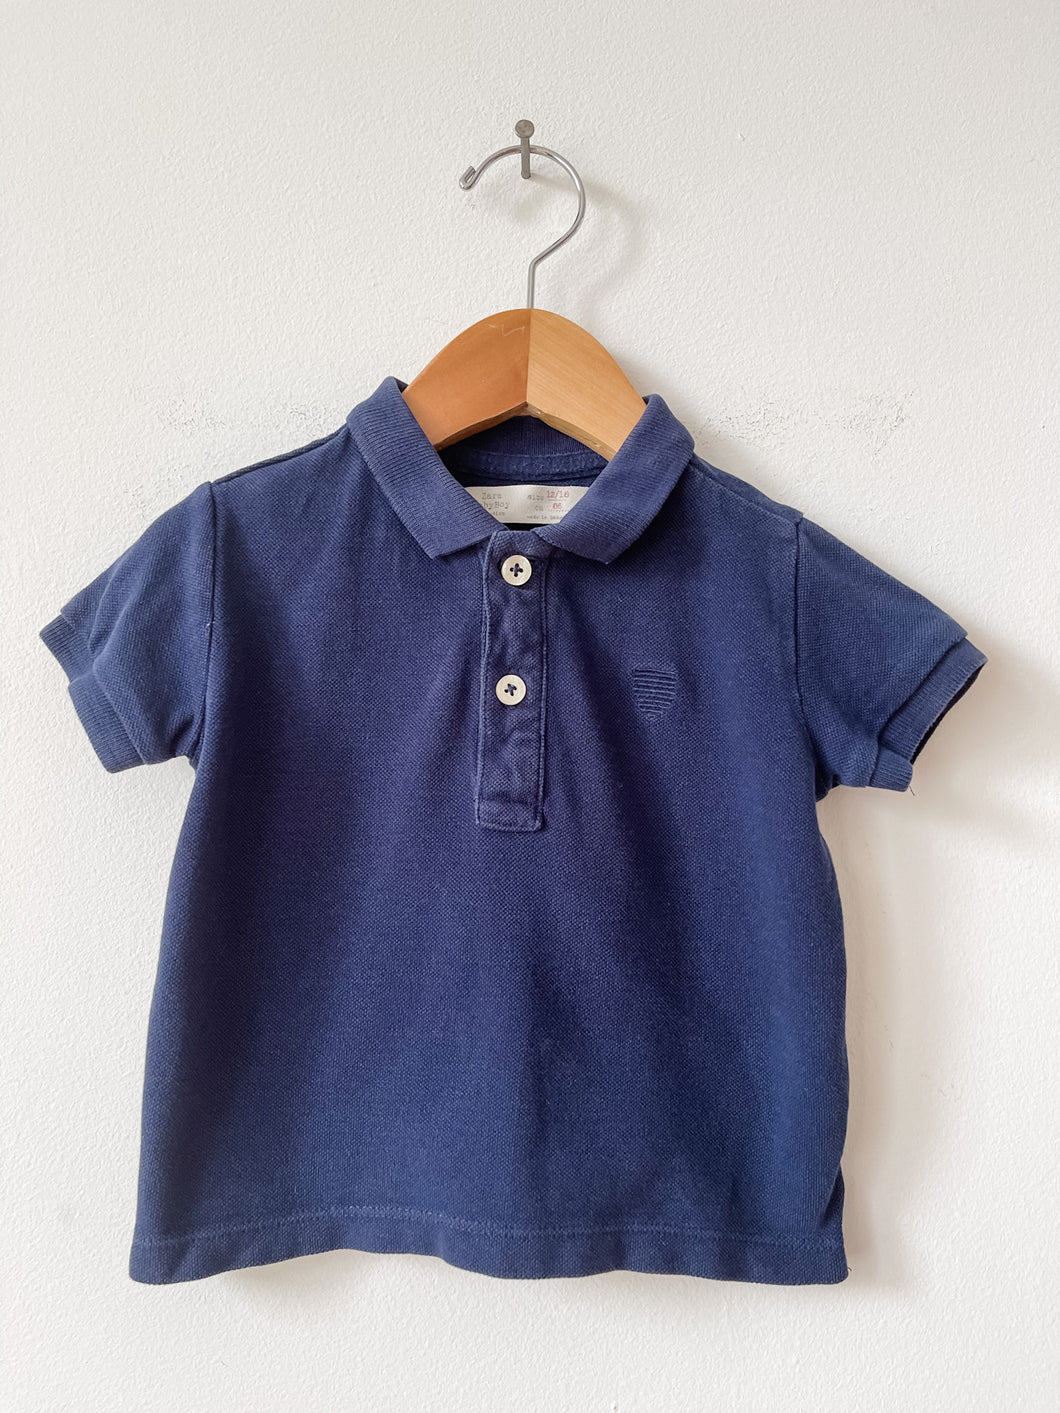 Boys Blue Zara Polo Shirt Size 12-18 Months